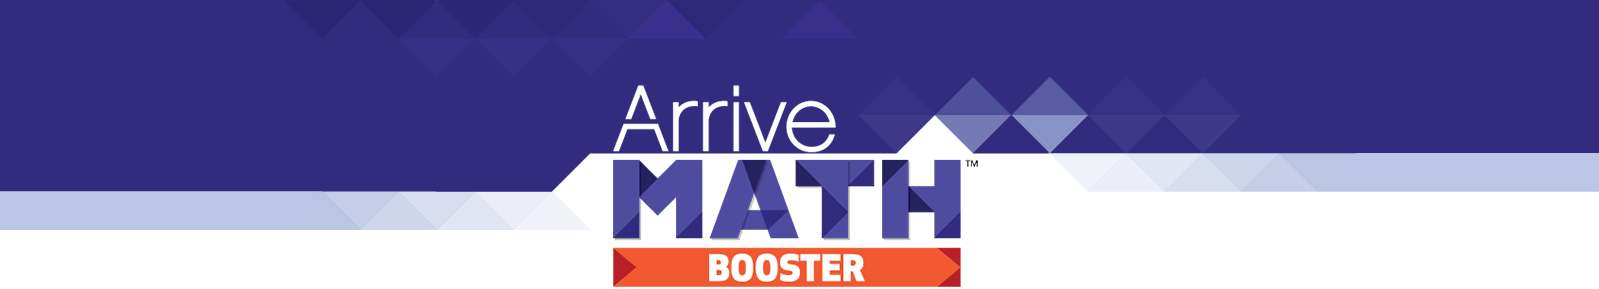 Arrive Math logo